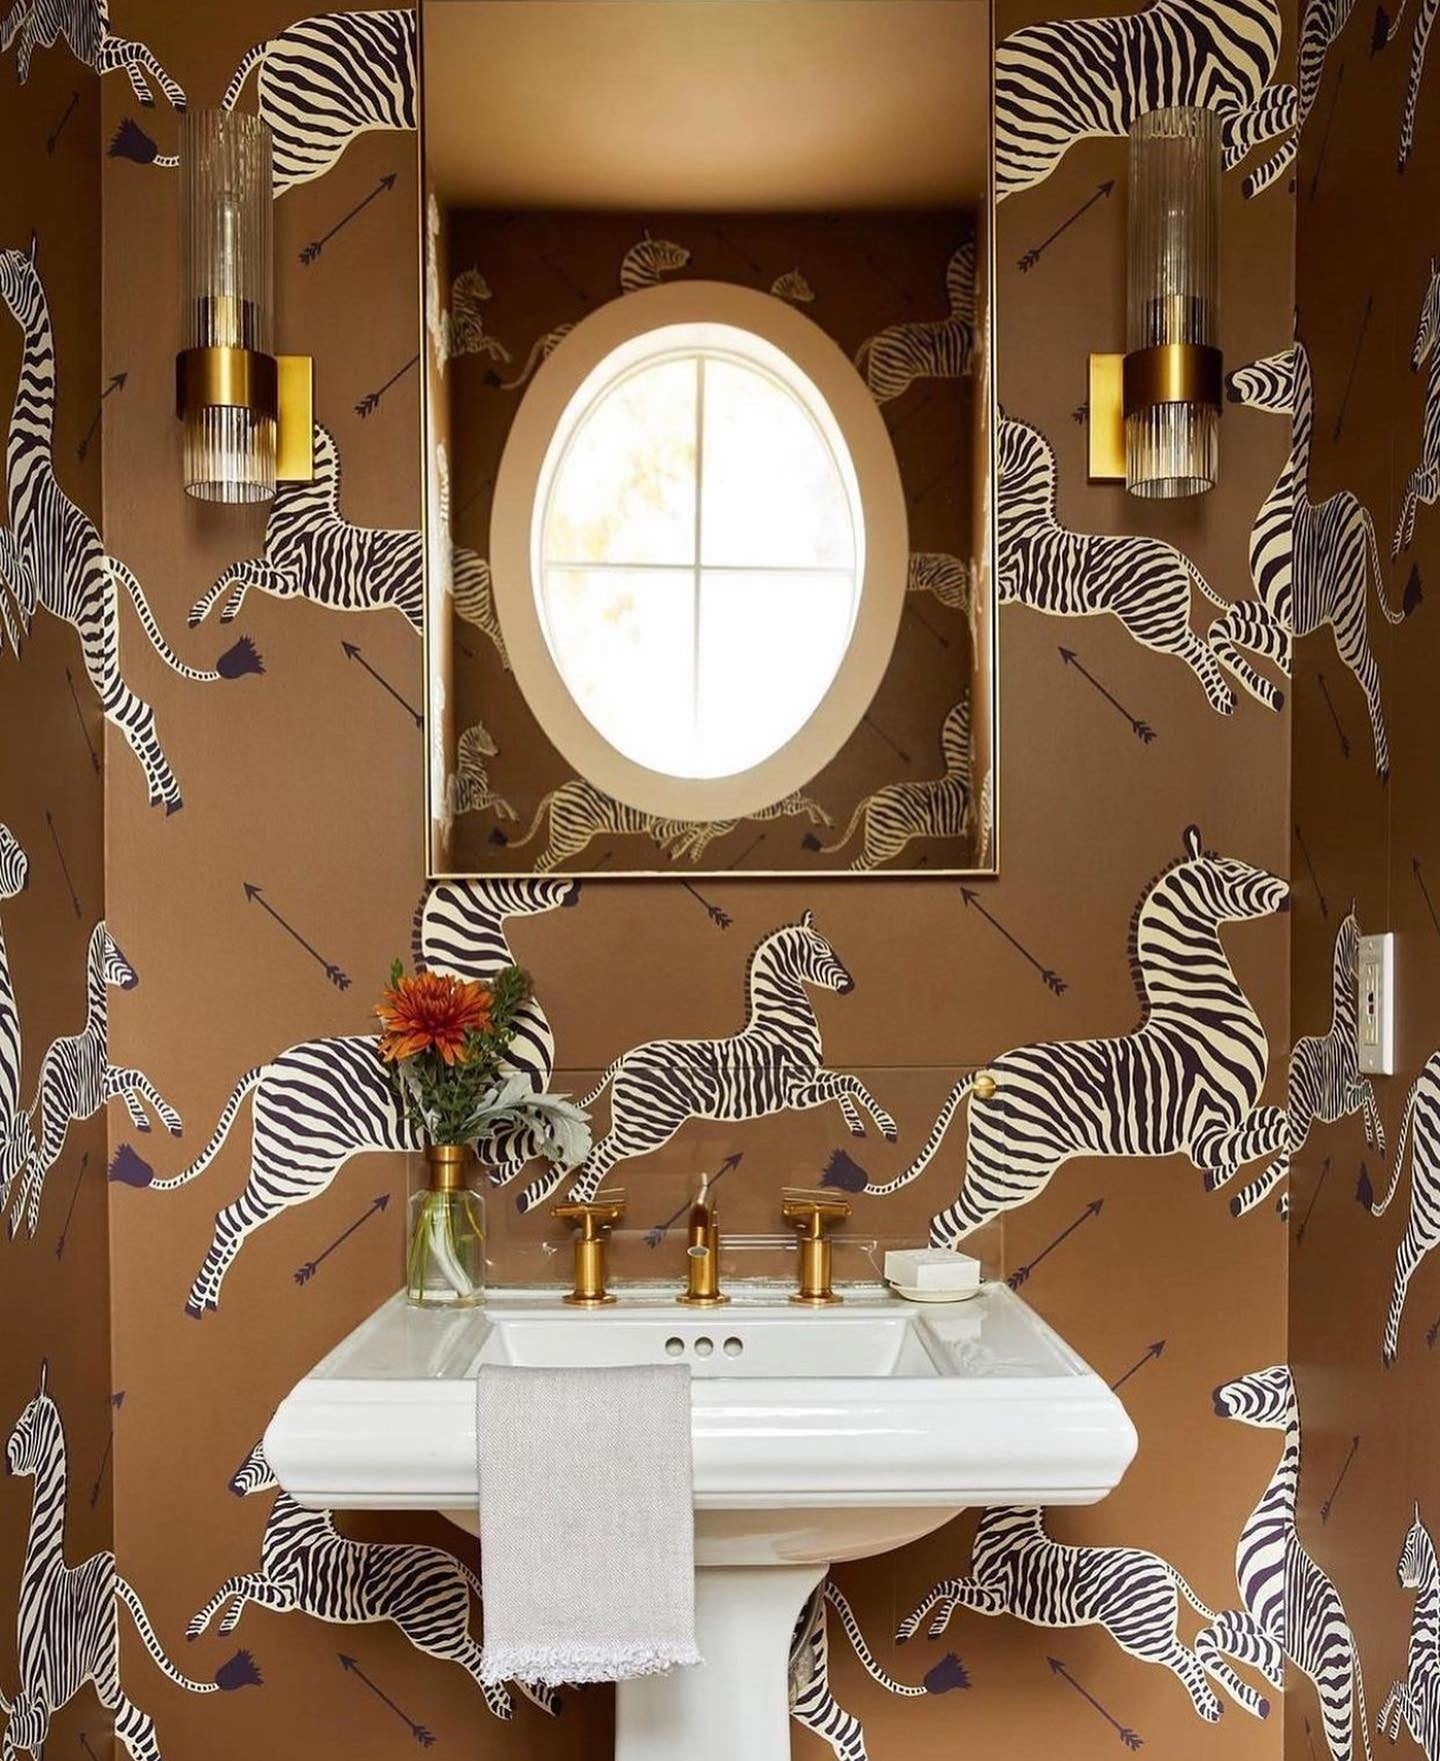 Scalamandres Iconic Zebra Wallpaper Gets Modern Update  Luxe Interiors   Design